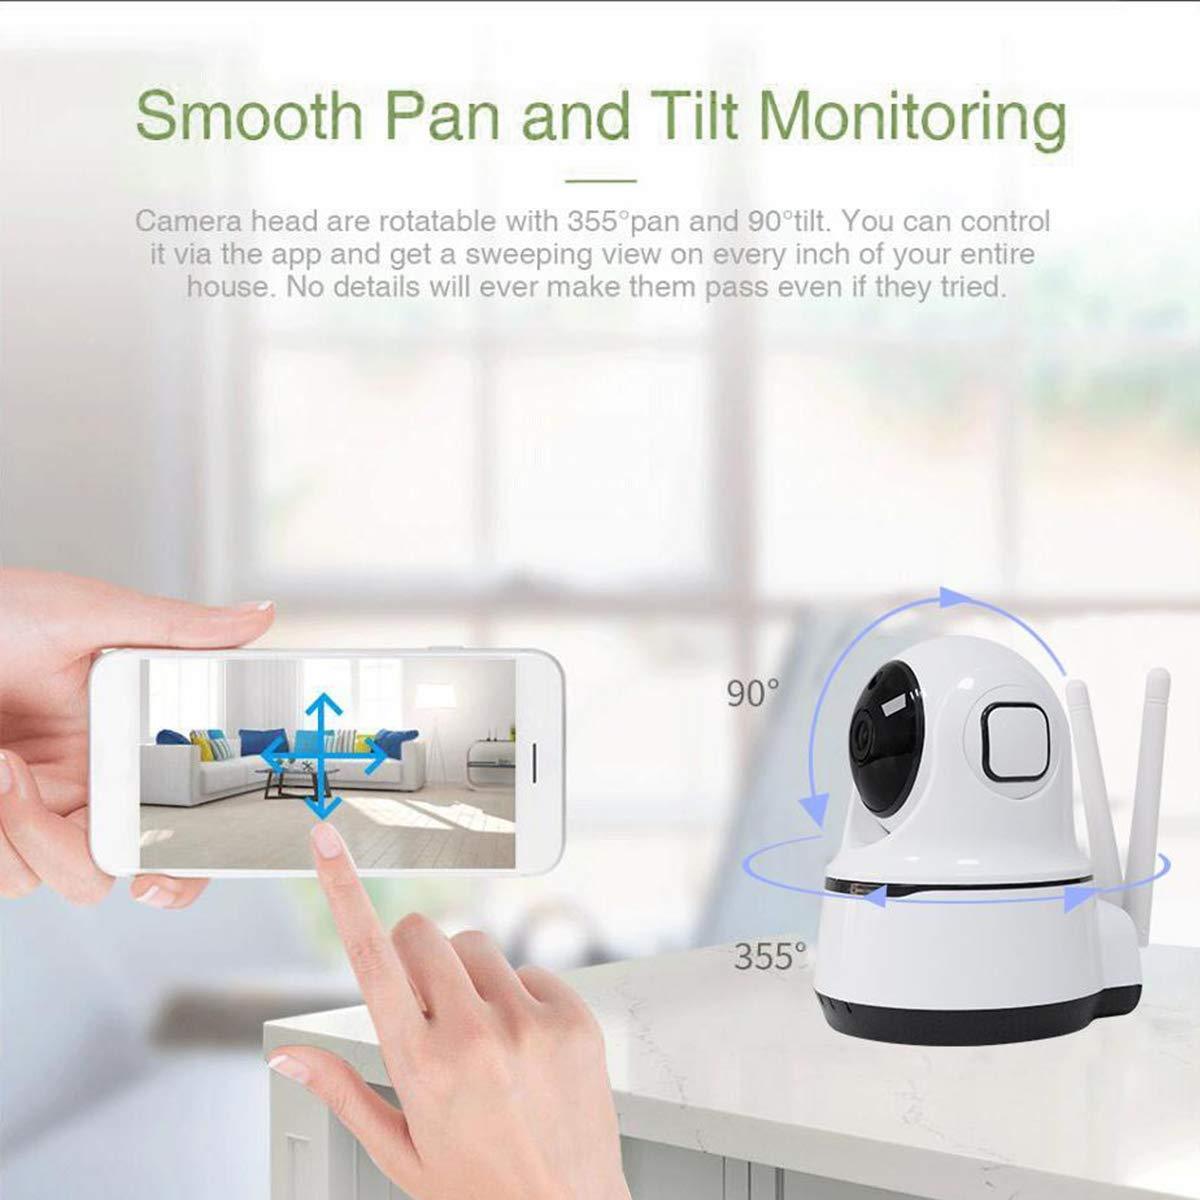 Dealsplant CareCam 360° Smart Pan Tilt Home Office WiFi Camera-care cam-dealsplant